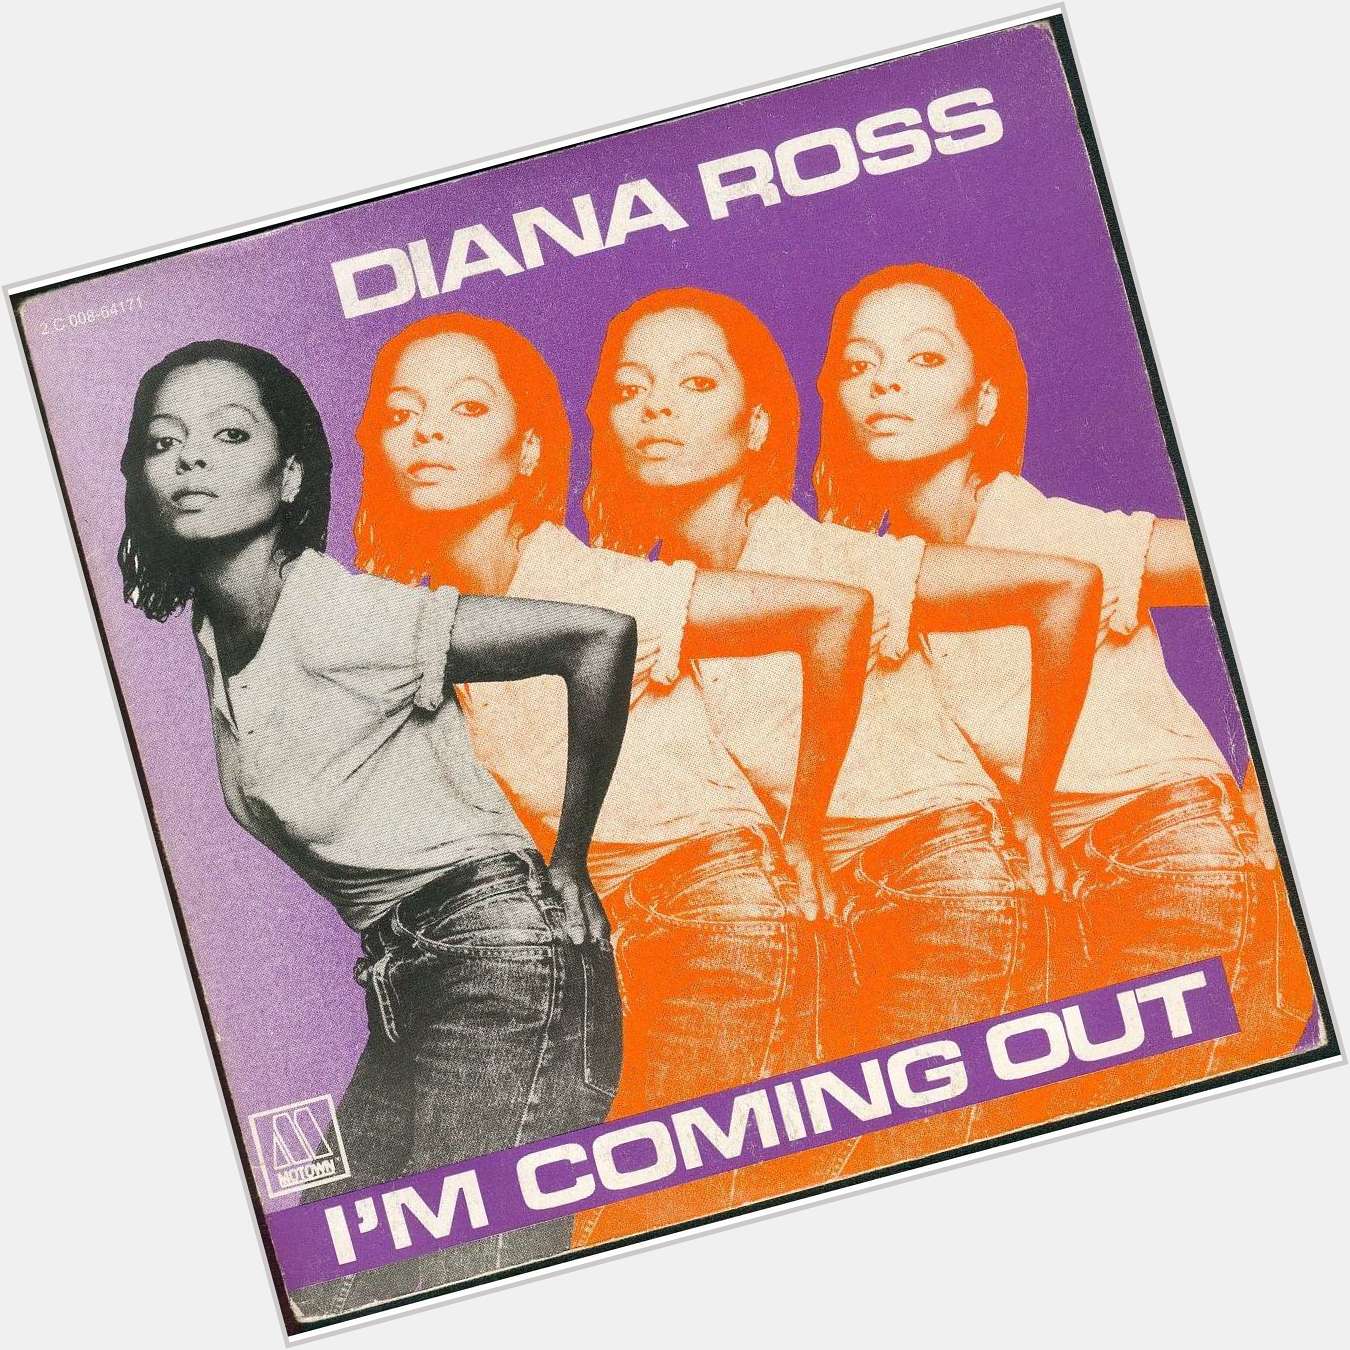 Happy Birthday to Ms. Diana Ross 